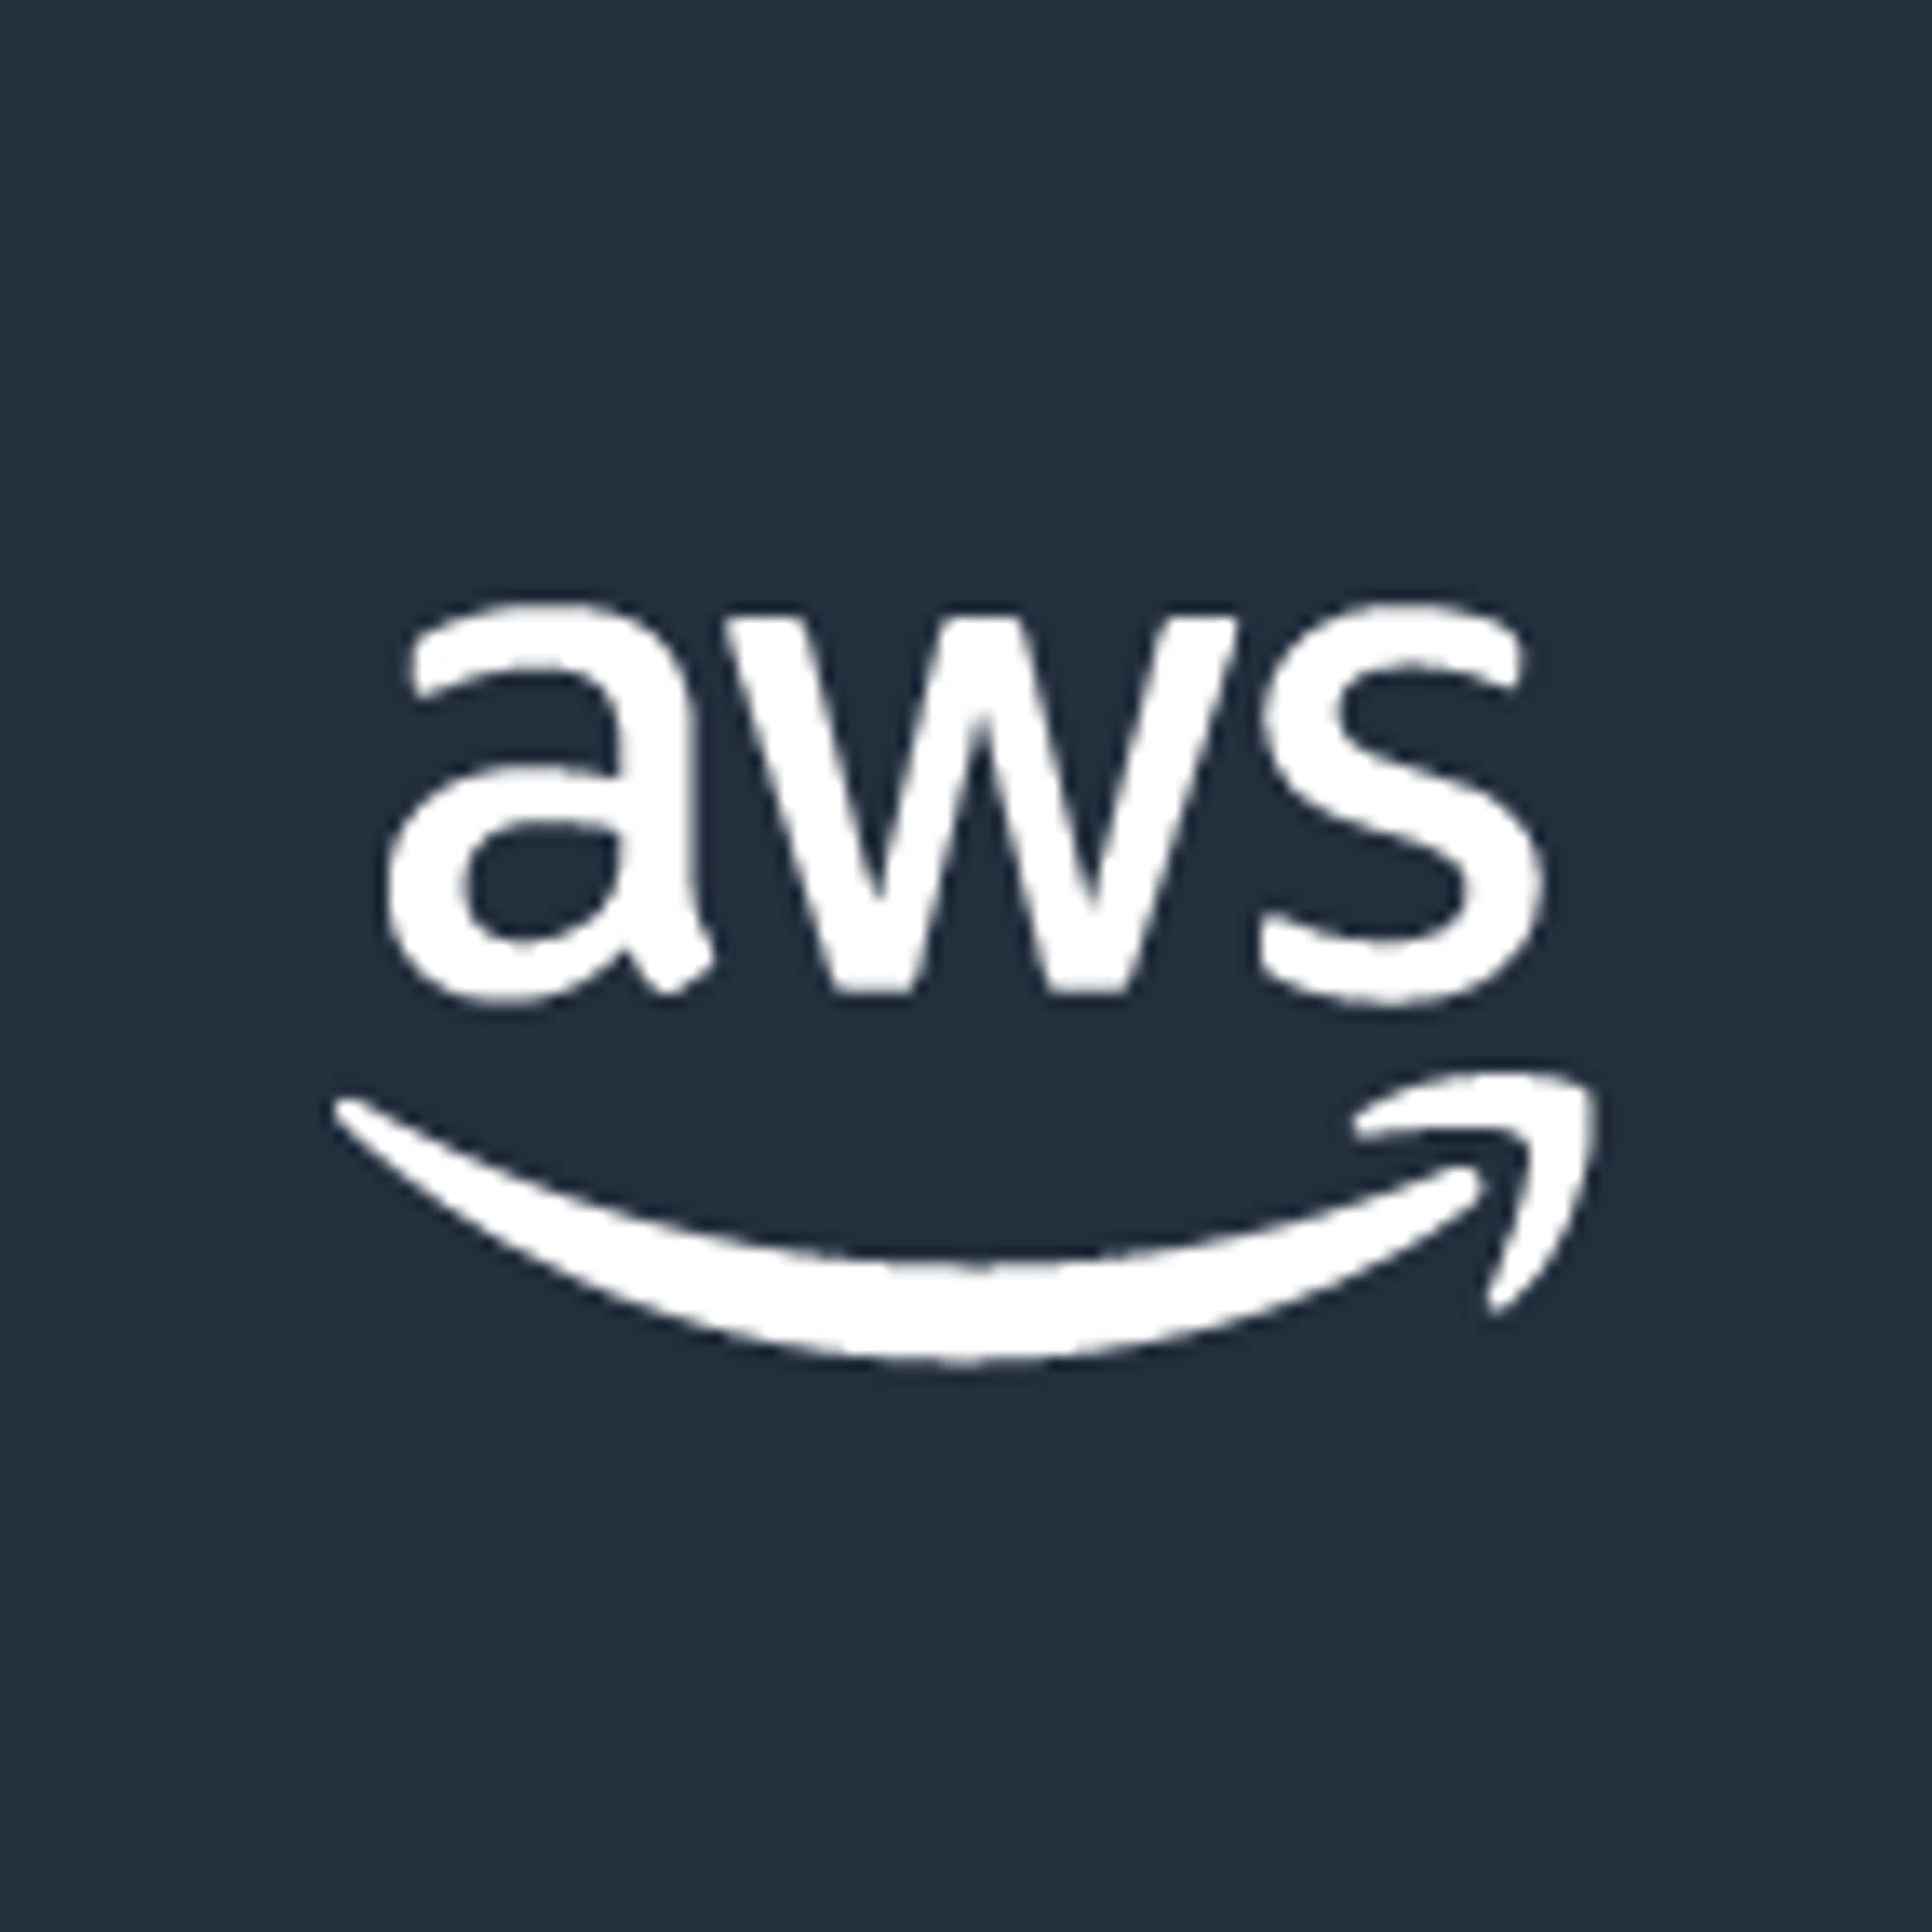 Amazon EC2 Service Level Agreement – Amazon Web Services